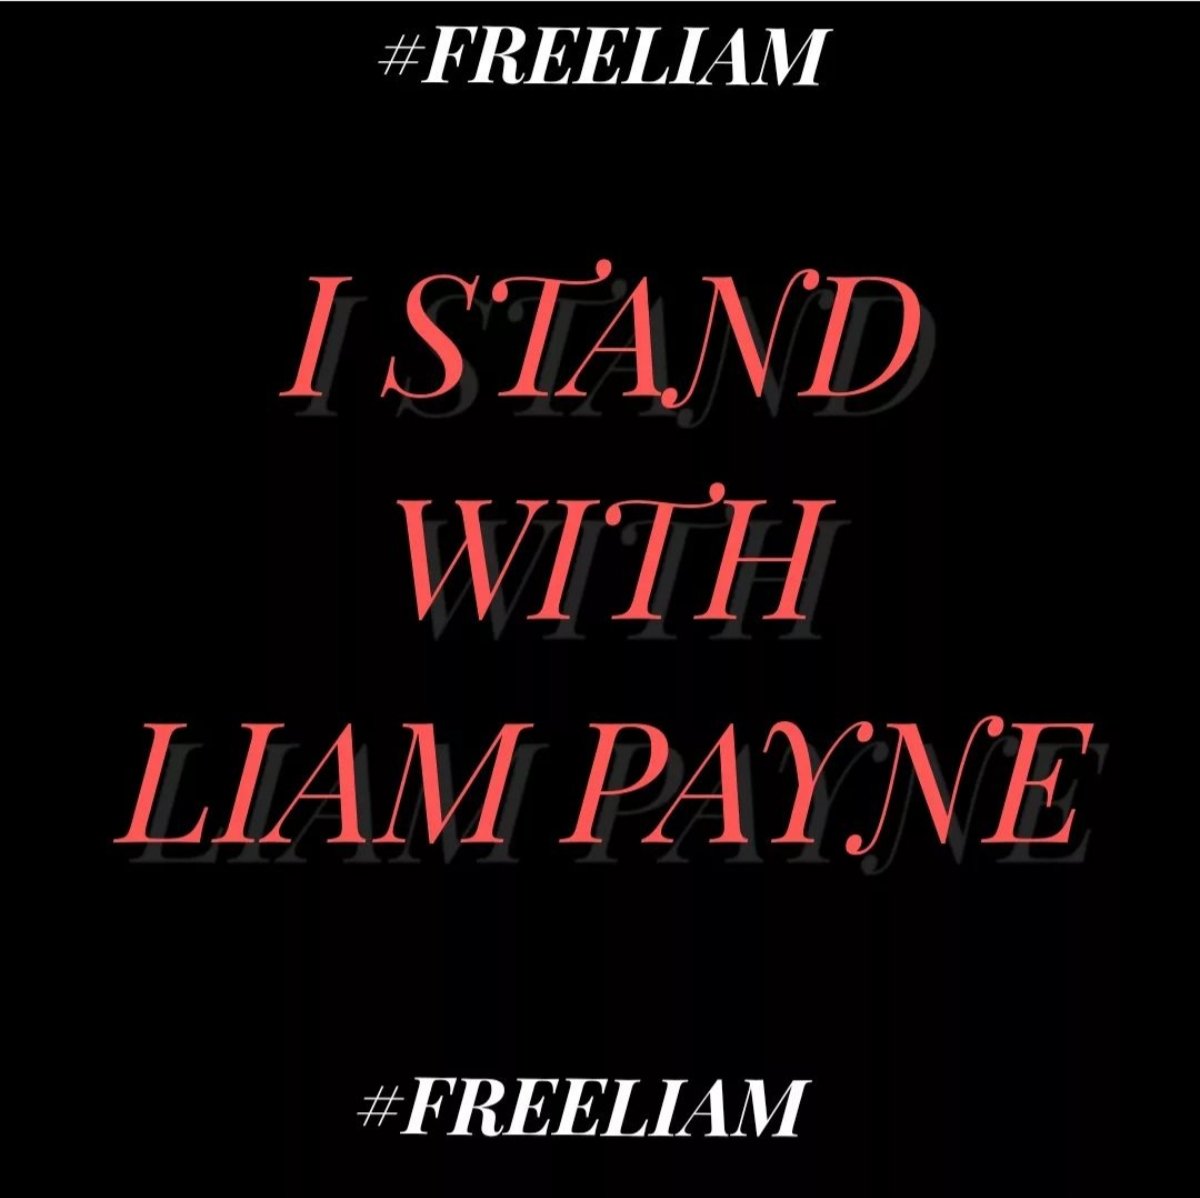 #FreeLiamPayne credits to lynfbi